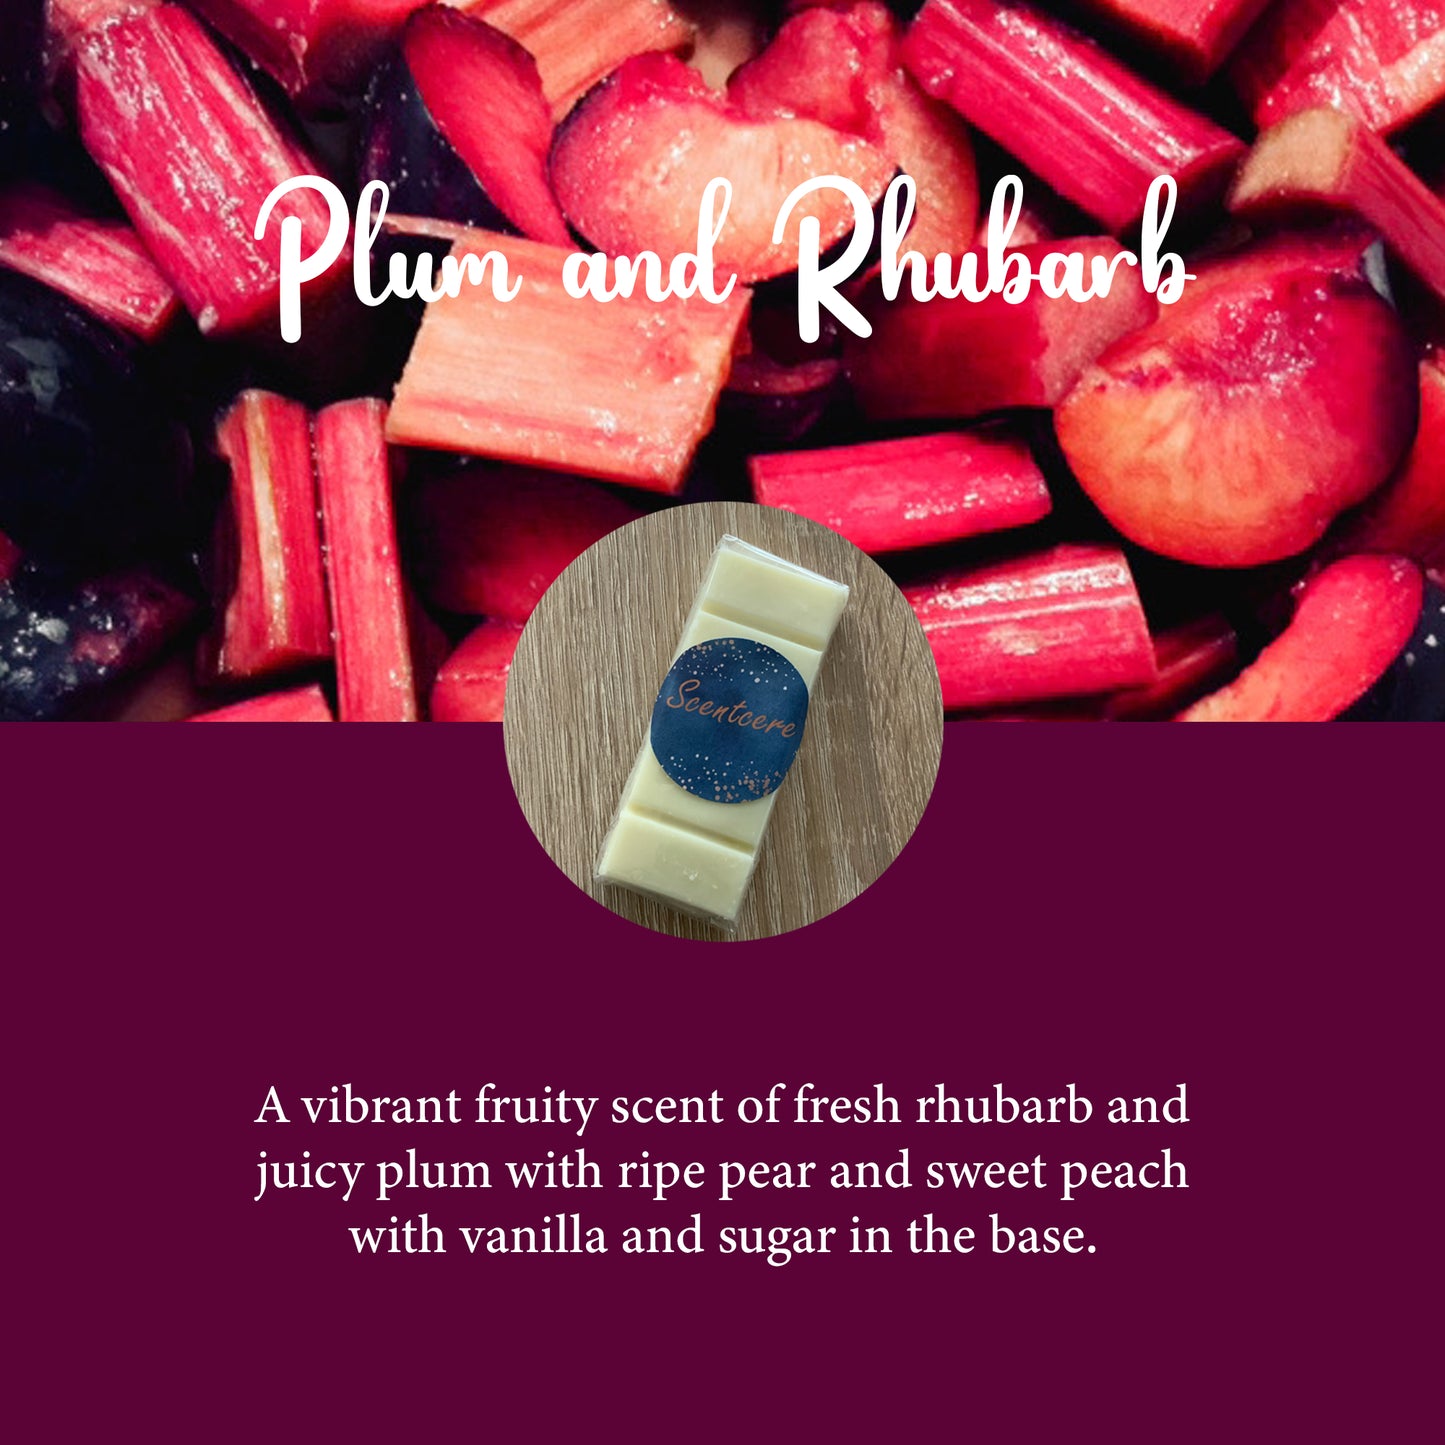 Plum and rhubarb